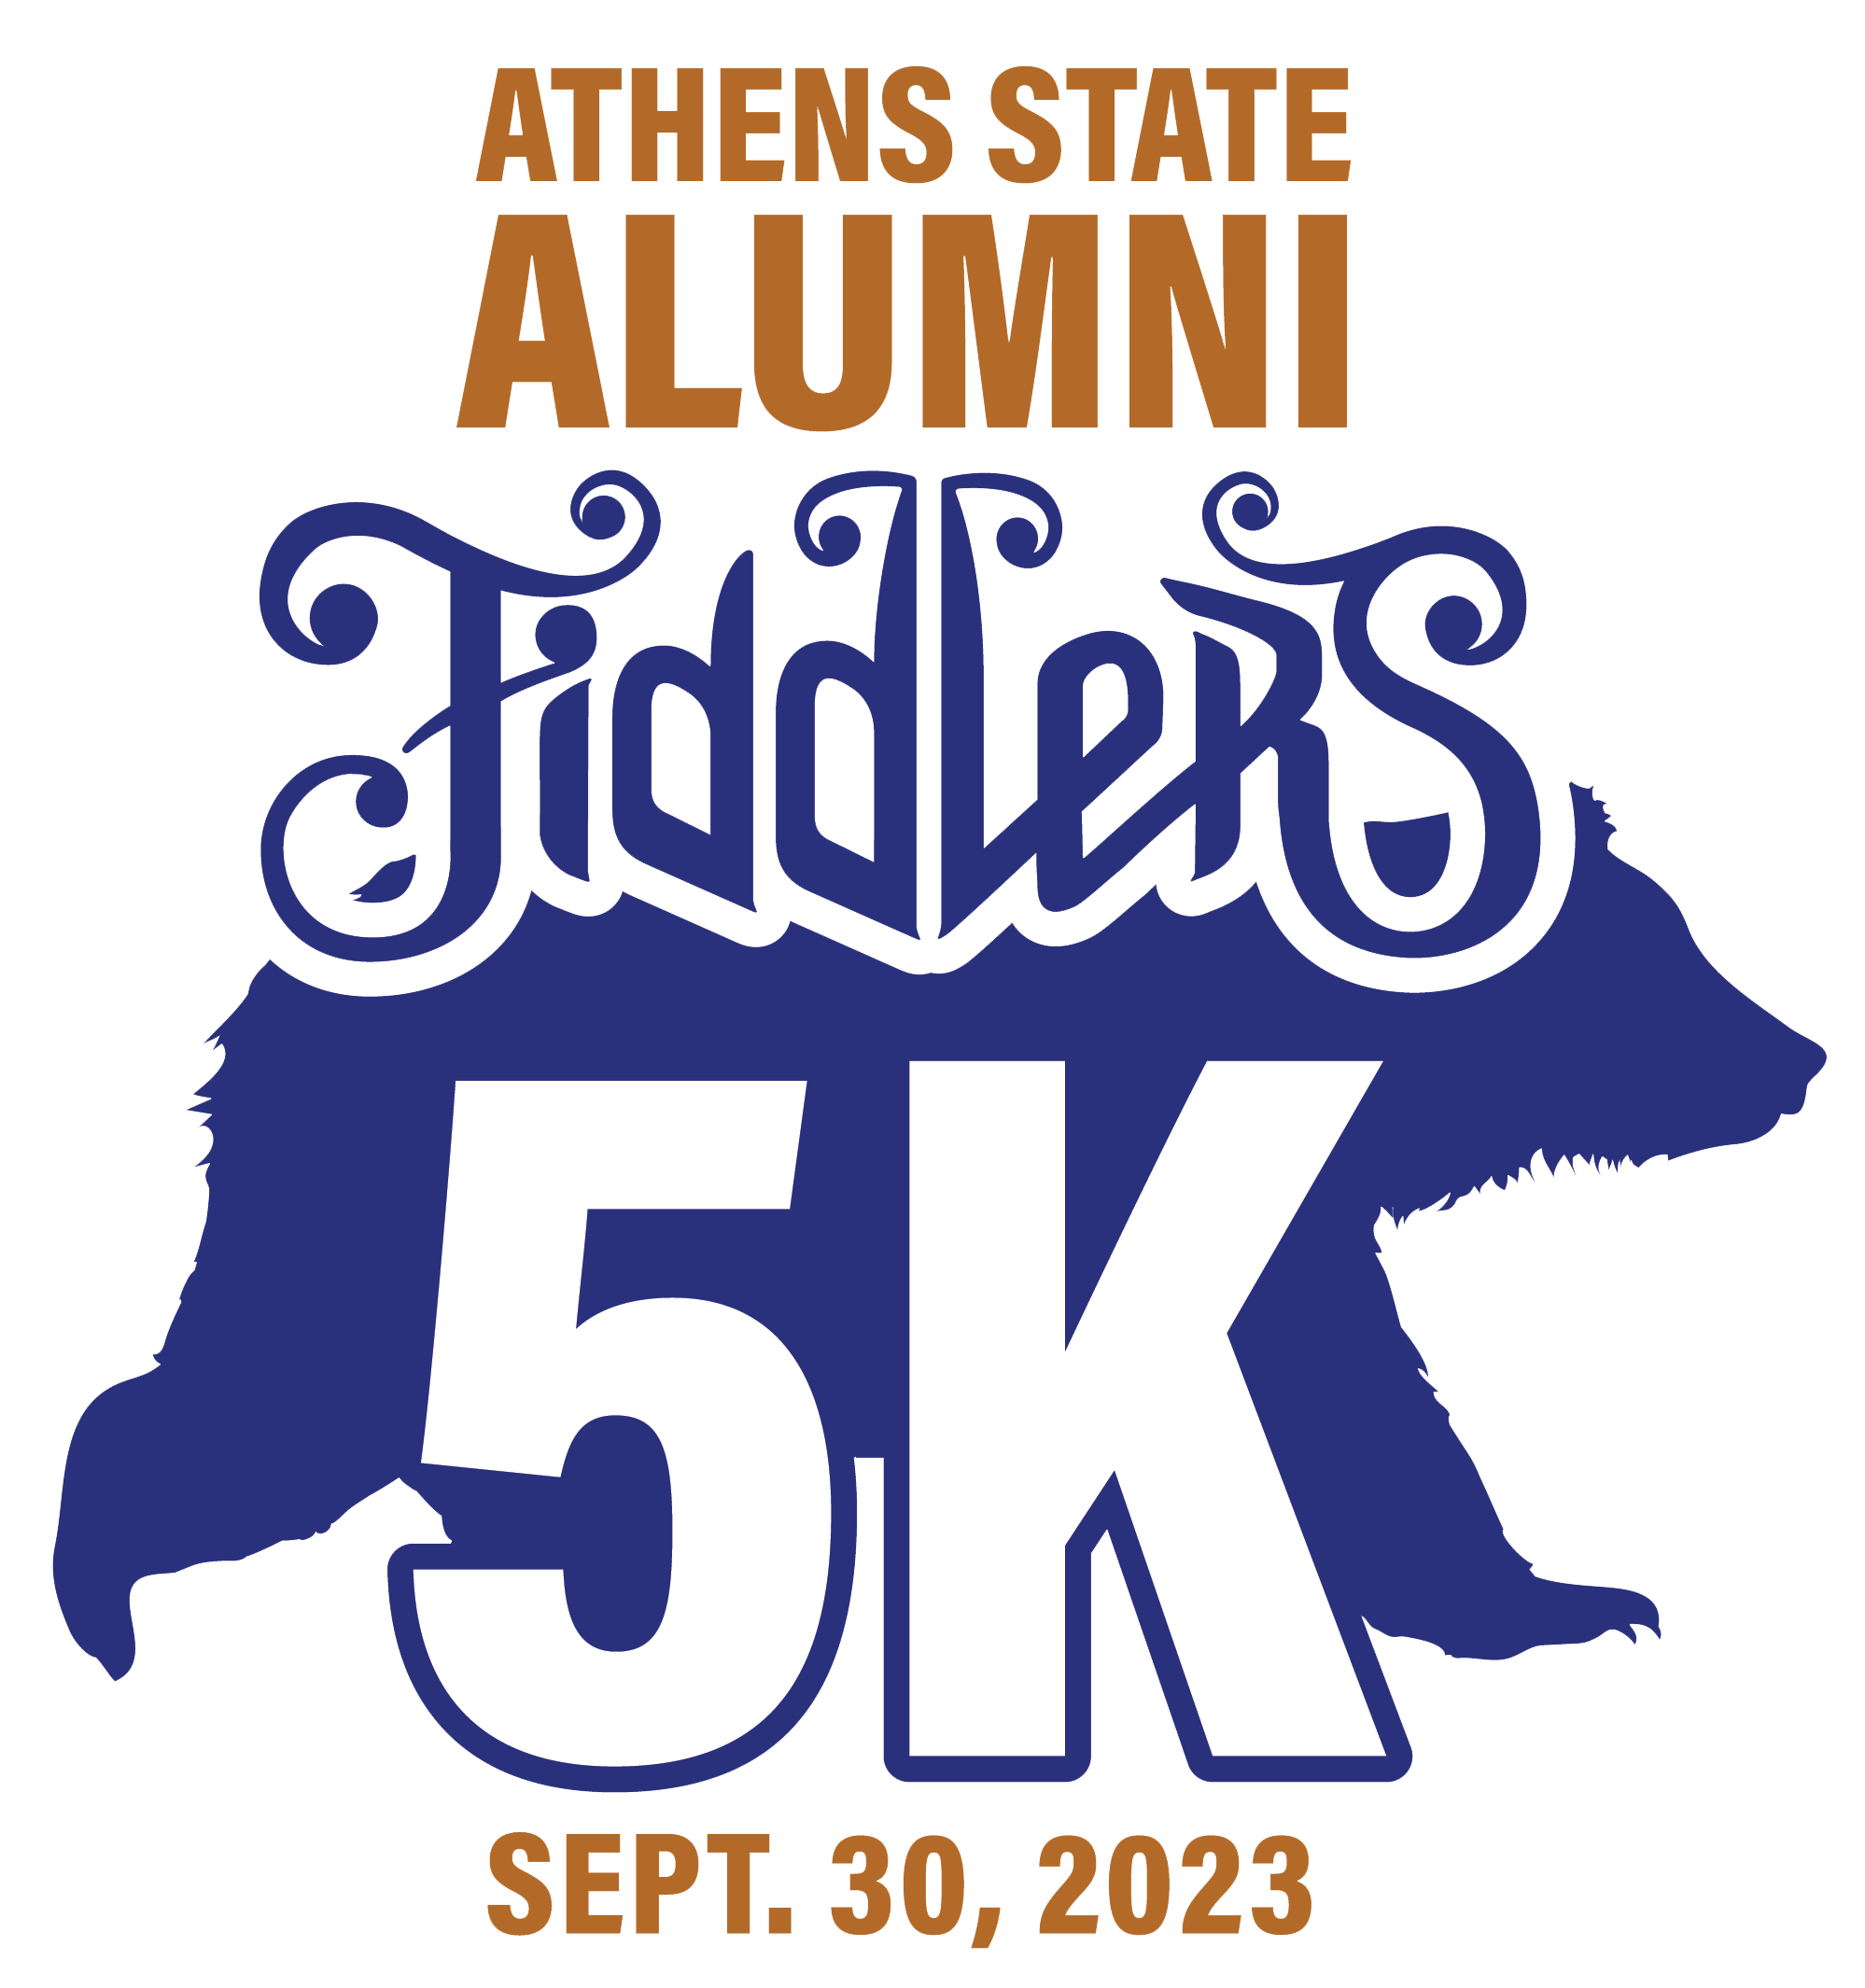 Athens State Alumni Fiddlers 5K